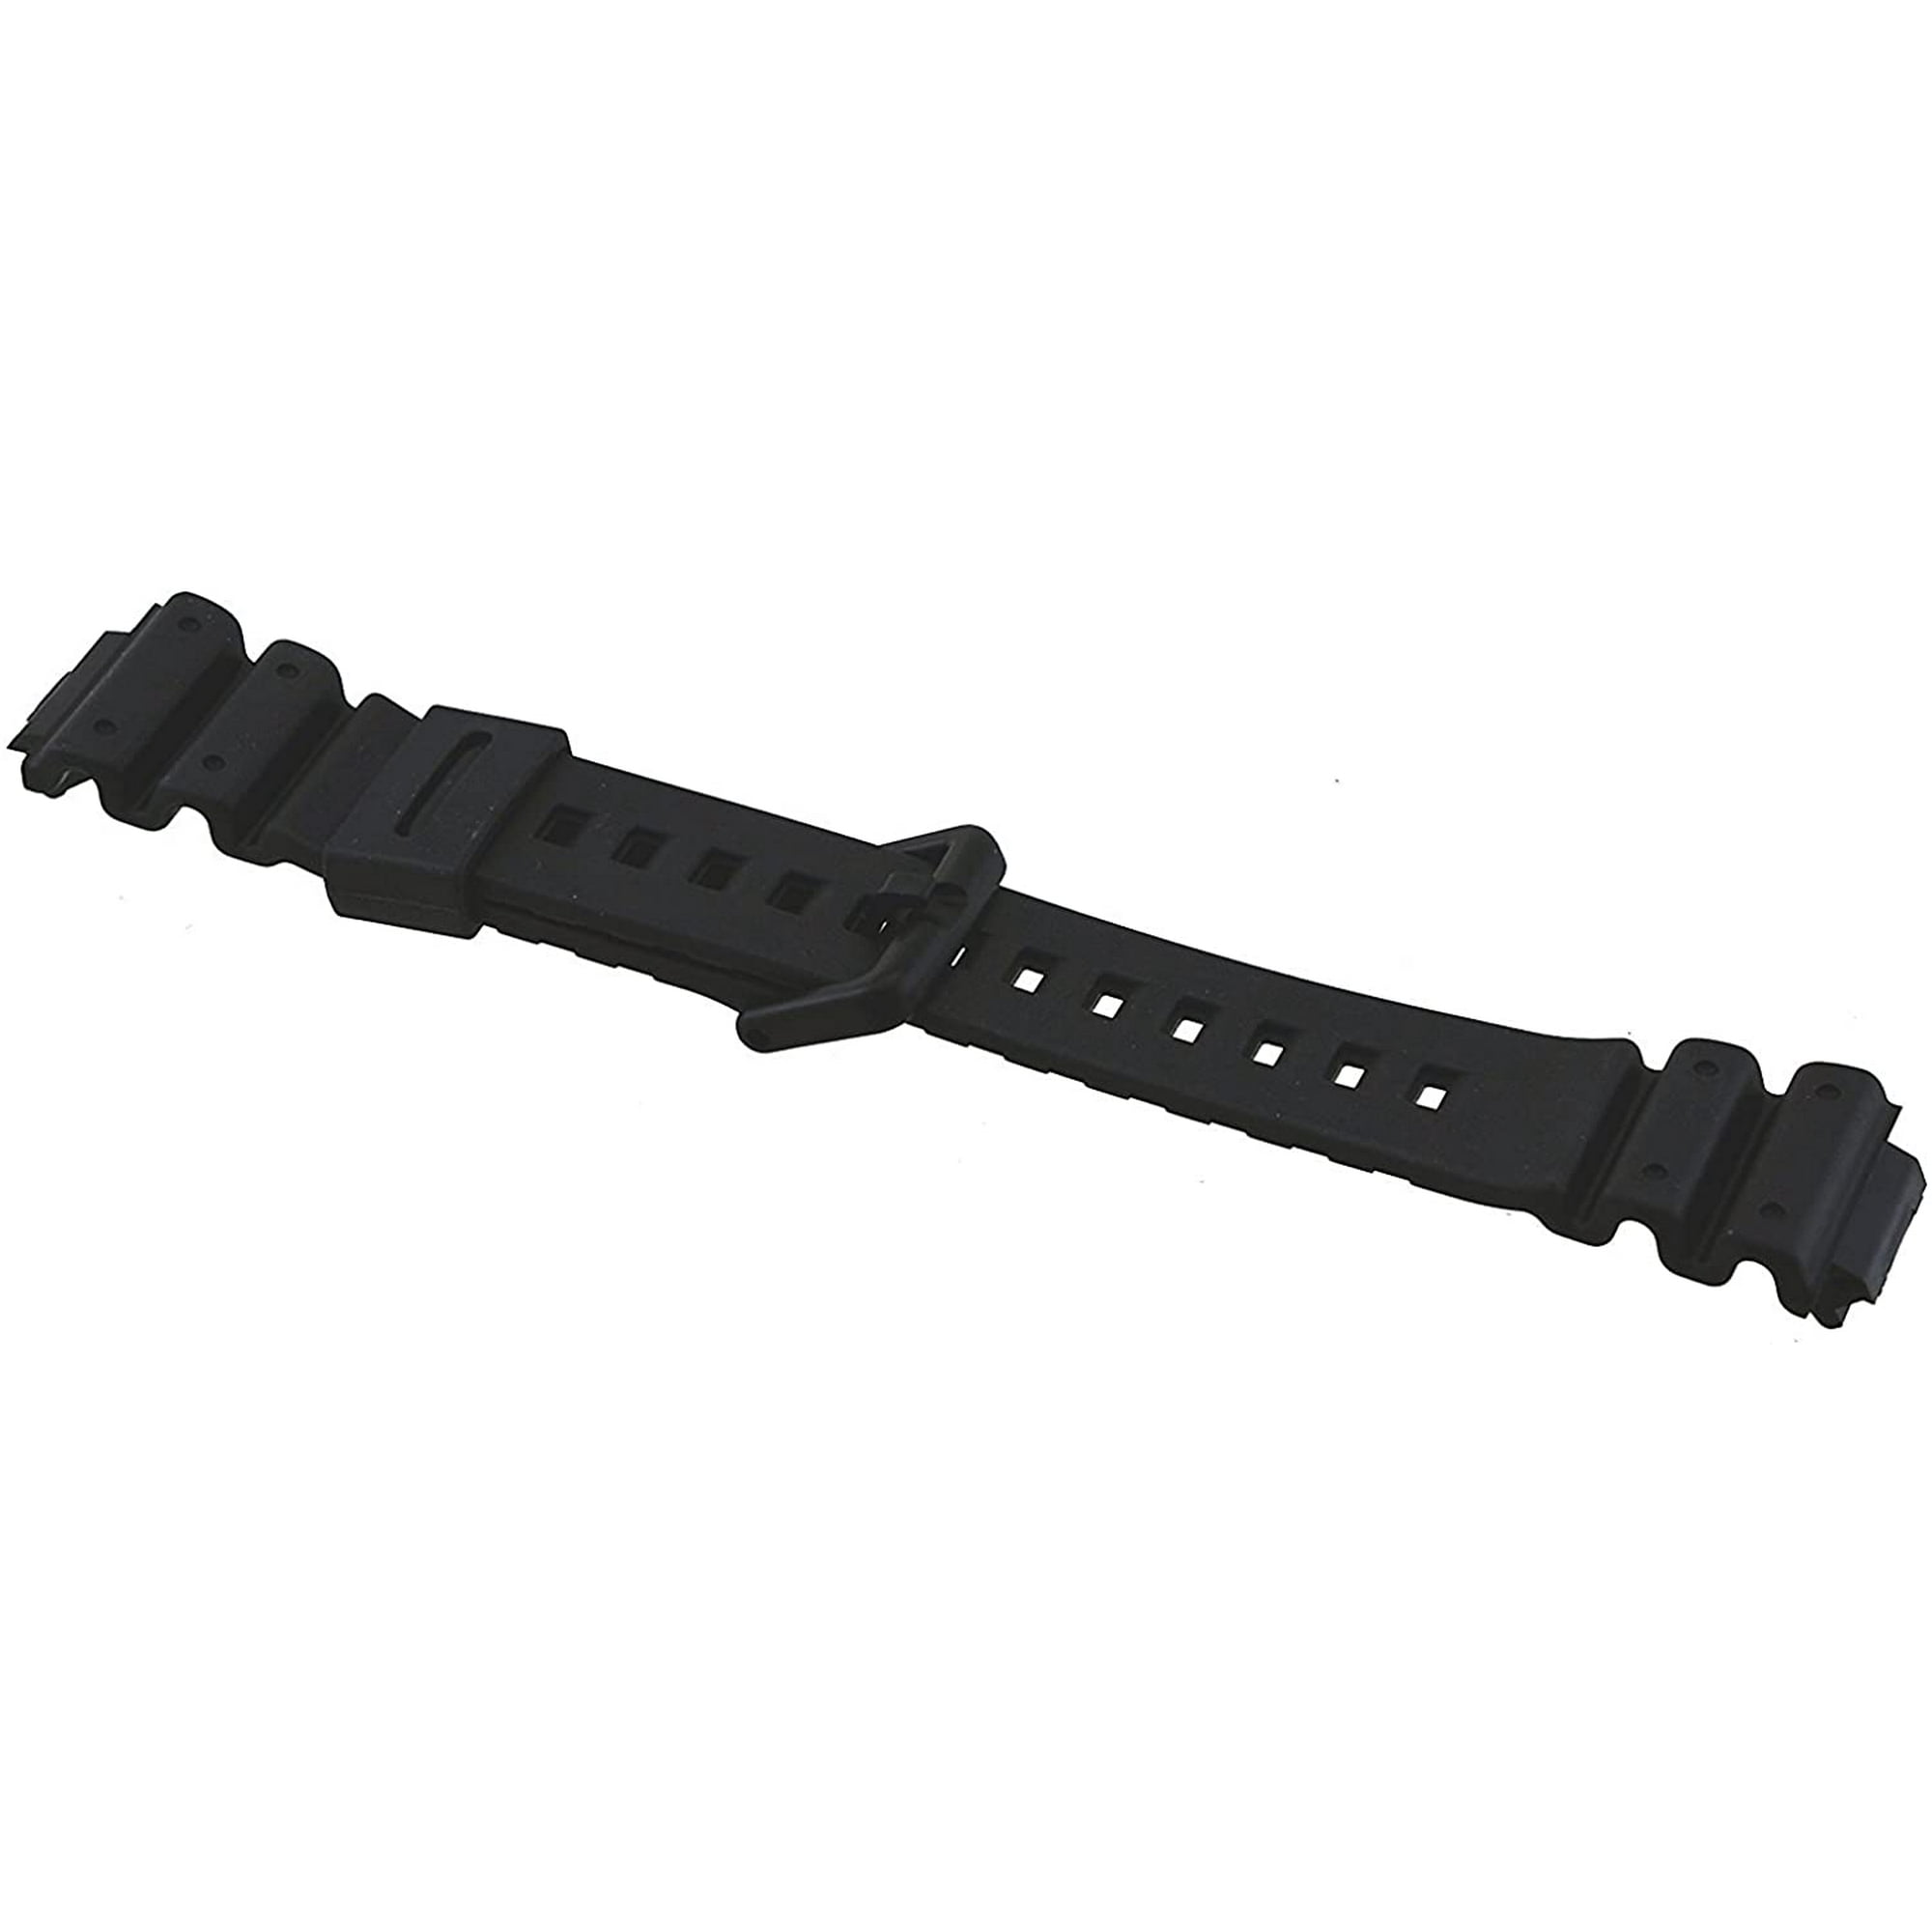 Casio G-shock 71604262 Original Factory Black Rubber Watch Band